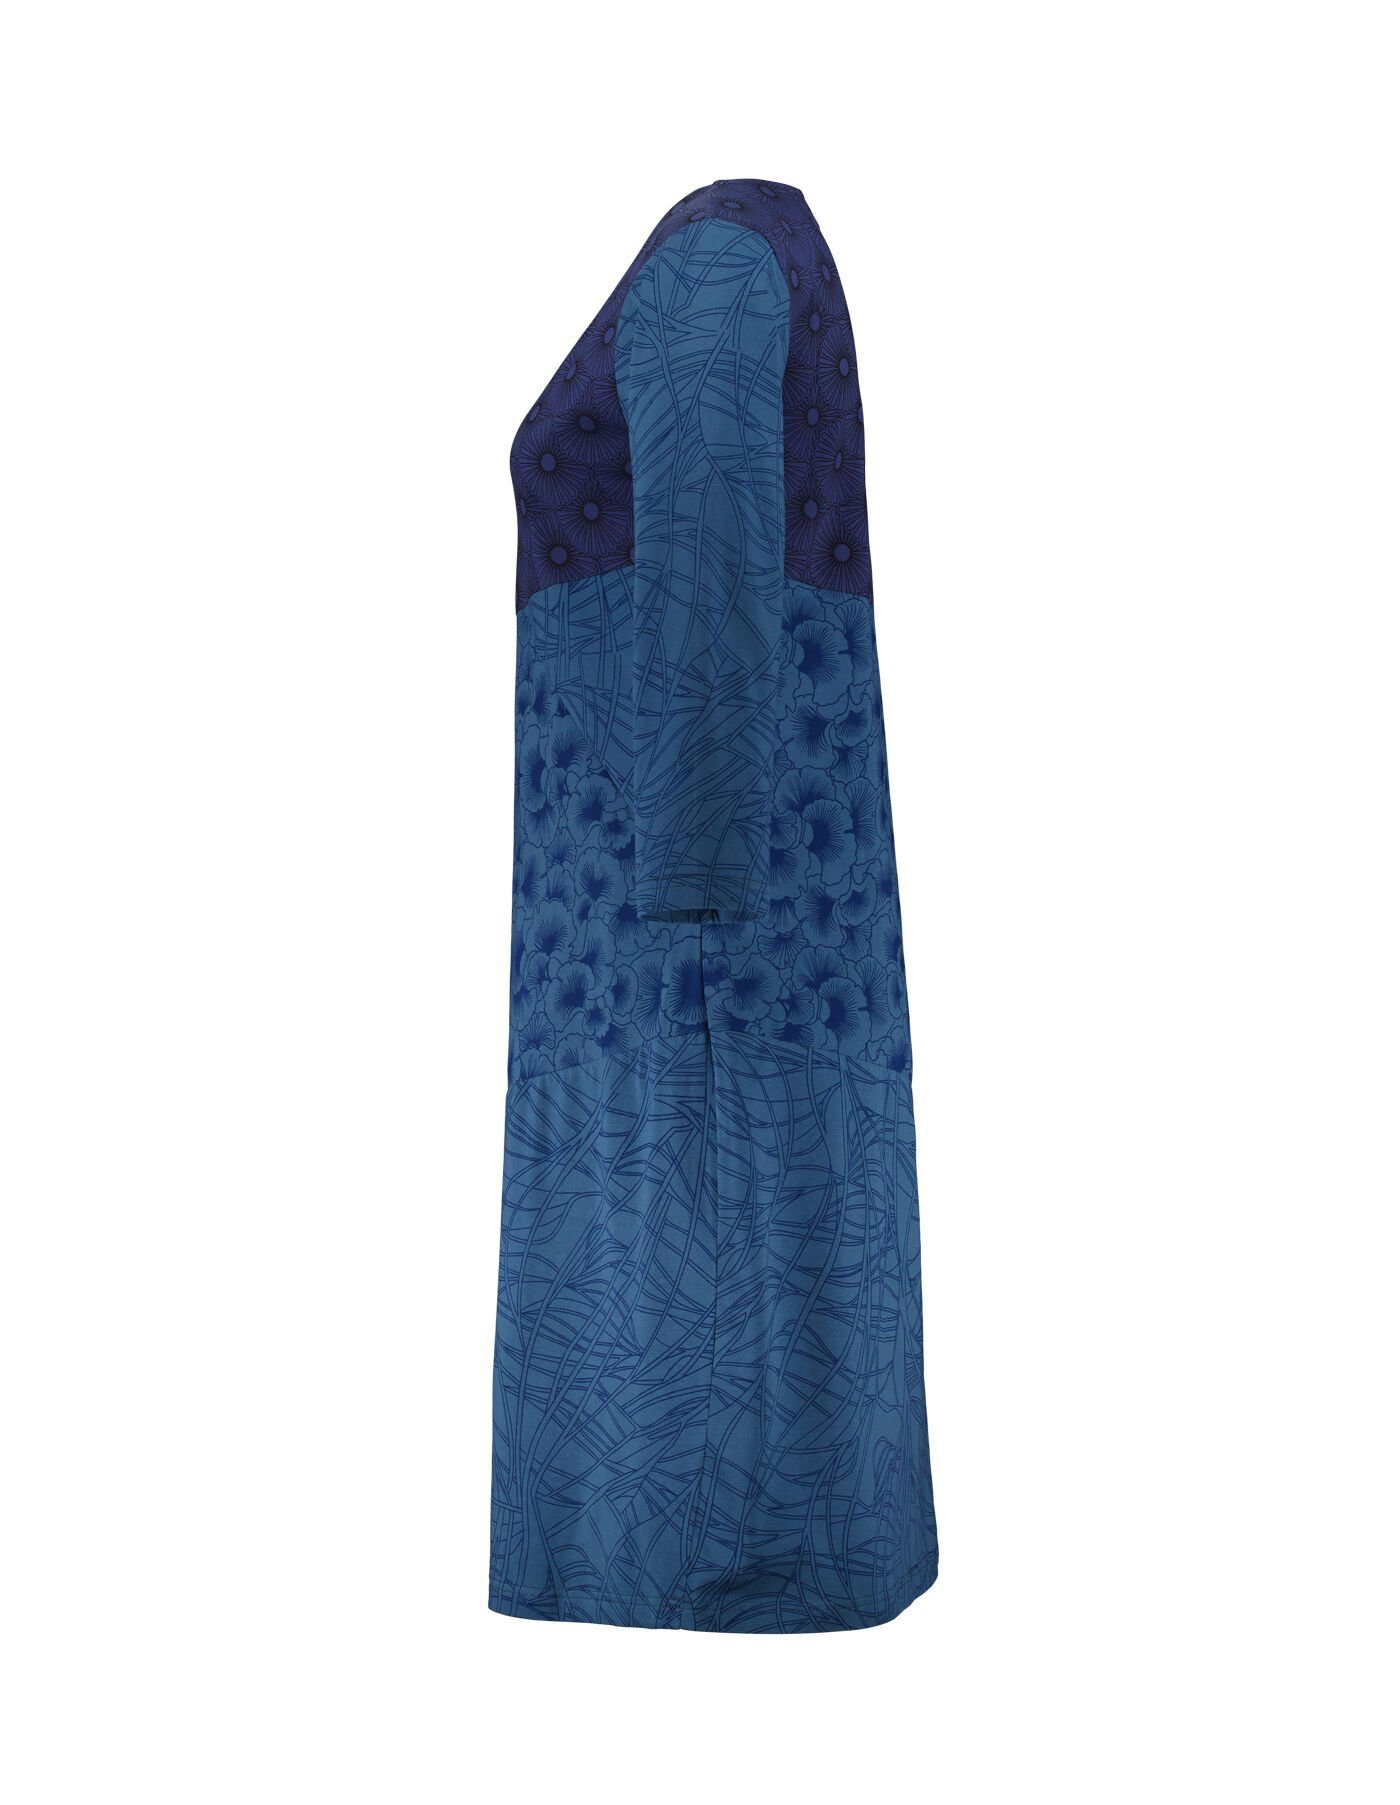 Patchwork Bio-Baumwolle Kleid echtes Deerberg aus Jerseykleid Hippie Ziminka Patchwork bedruckt dunkelblau Goa